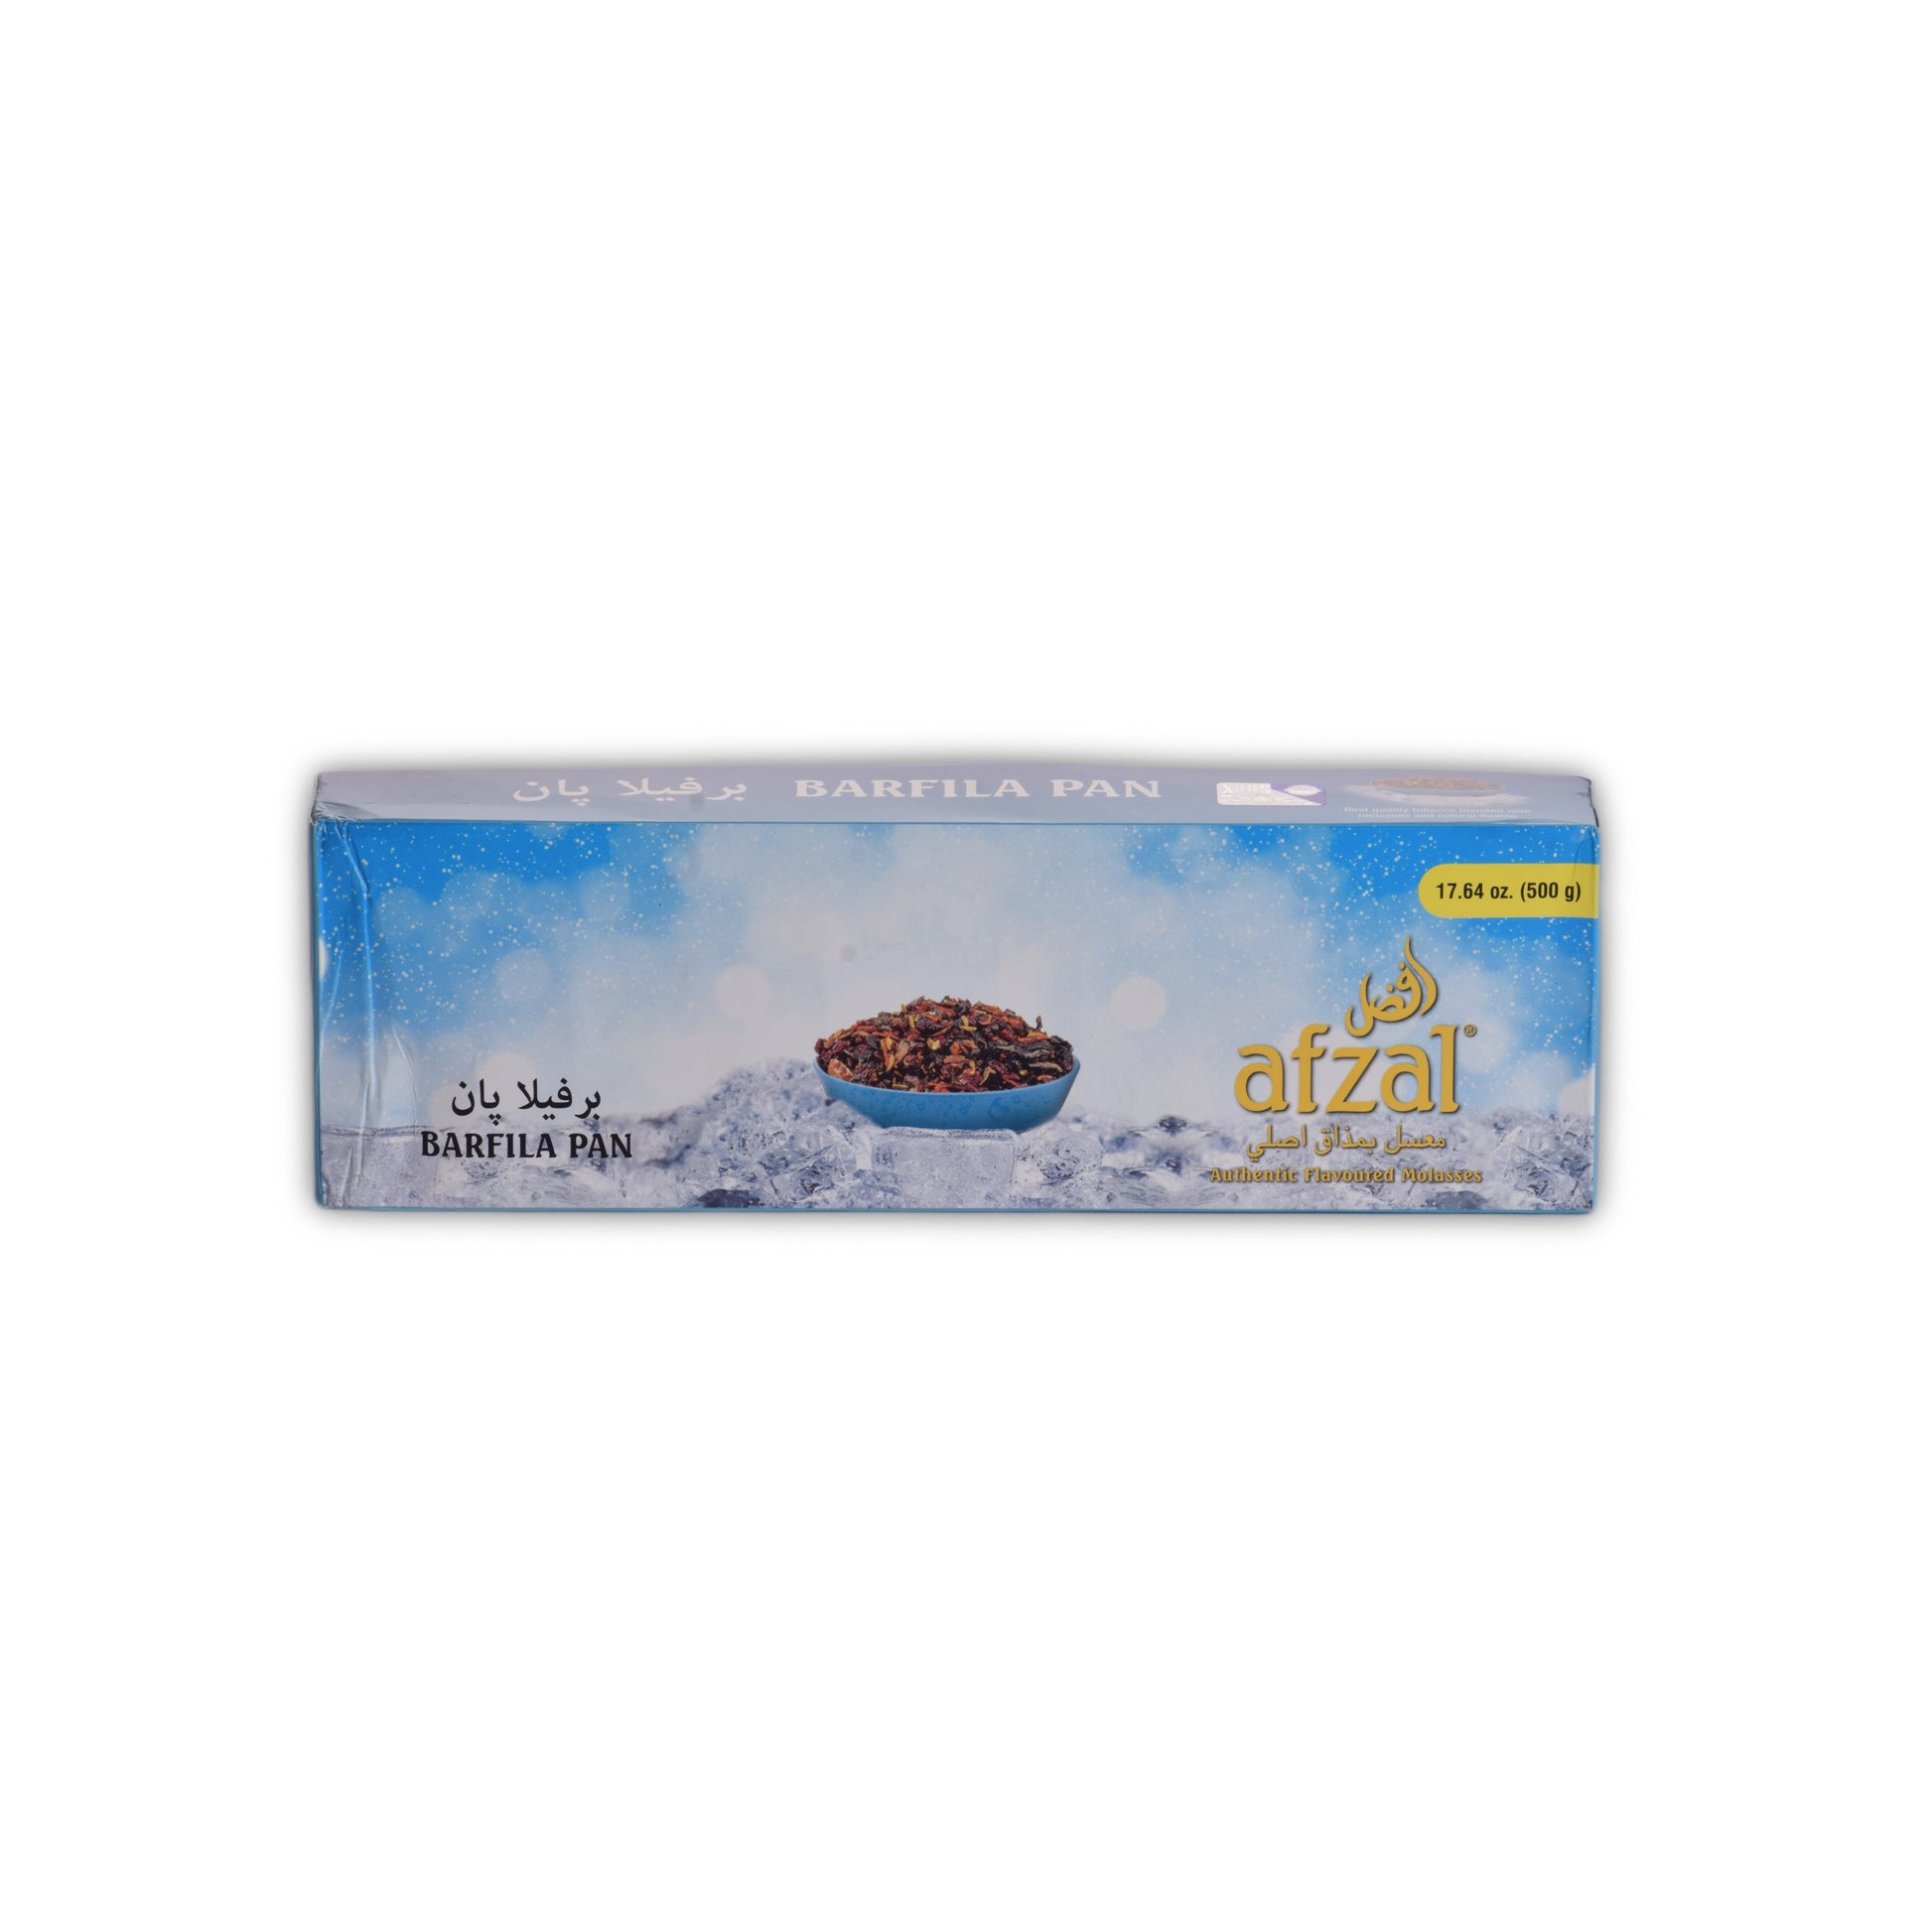 agzal barfila pan hookah flavor danda wholesale rate by shopdop